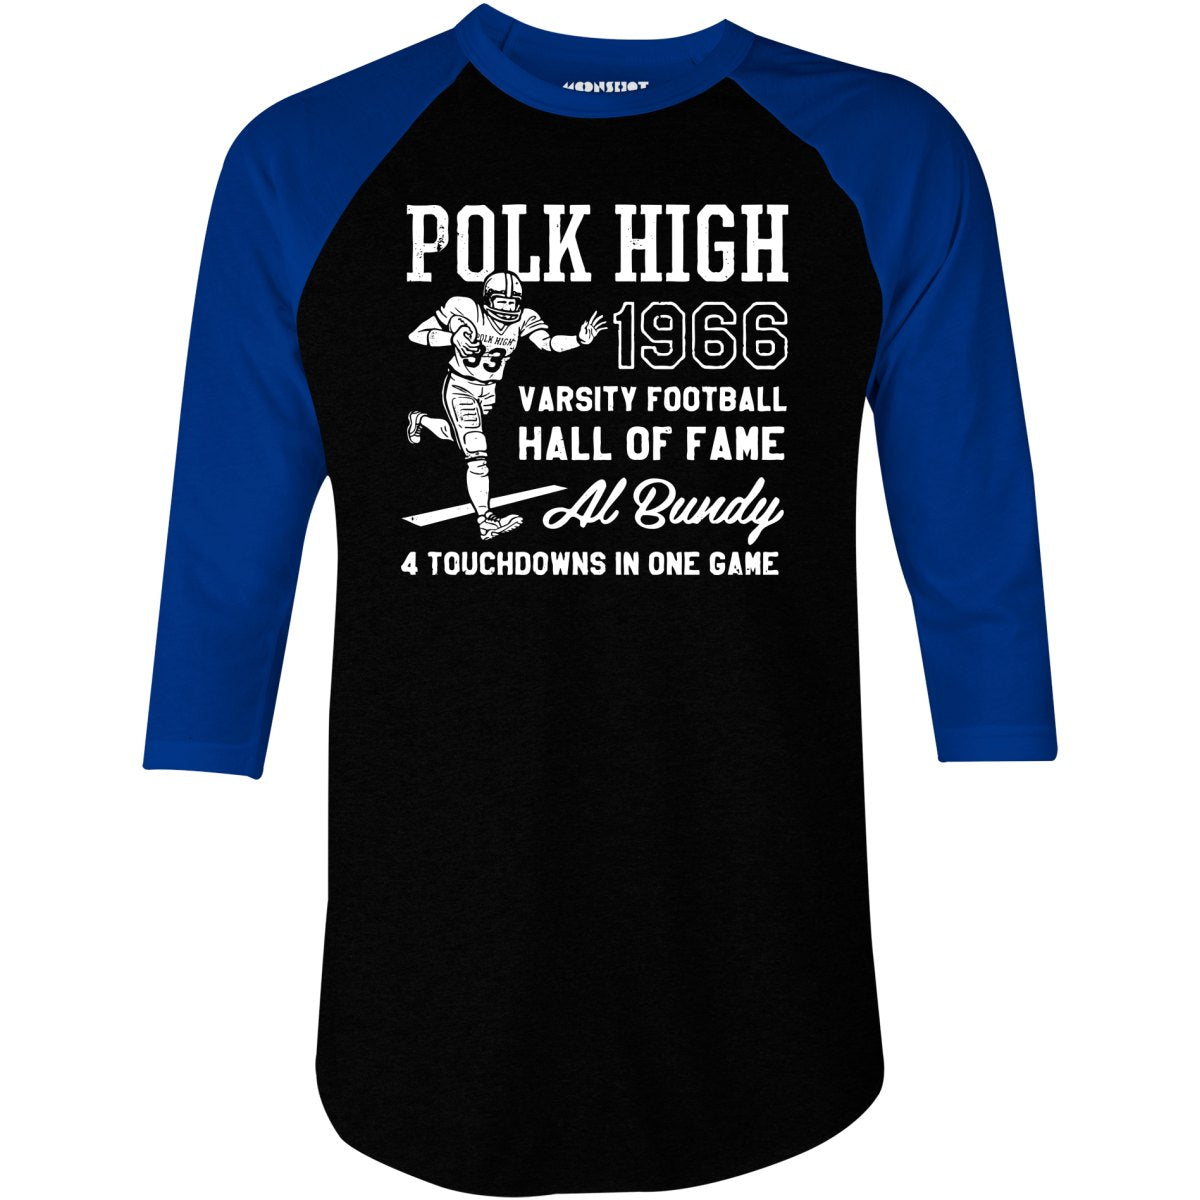 Al Bundy - 1966 Polk High Varsity Football Hall of Fame - 3/4 Sleeve Raglan T-Shirt